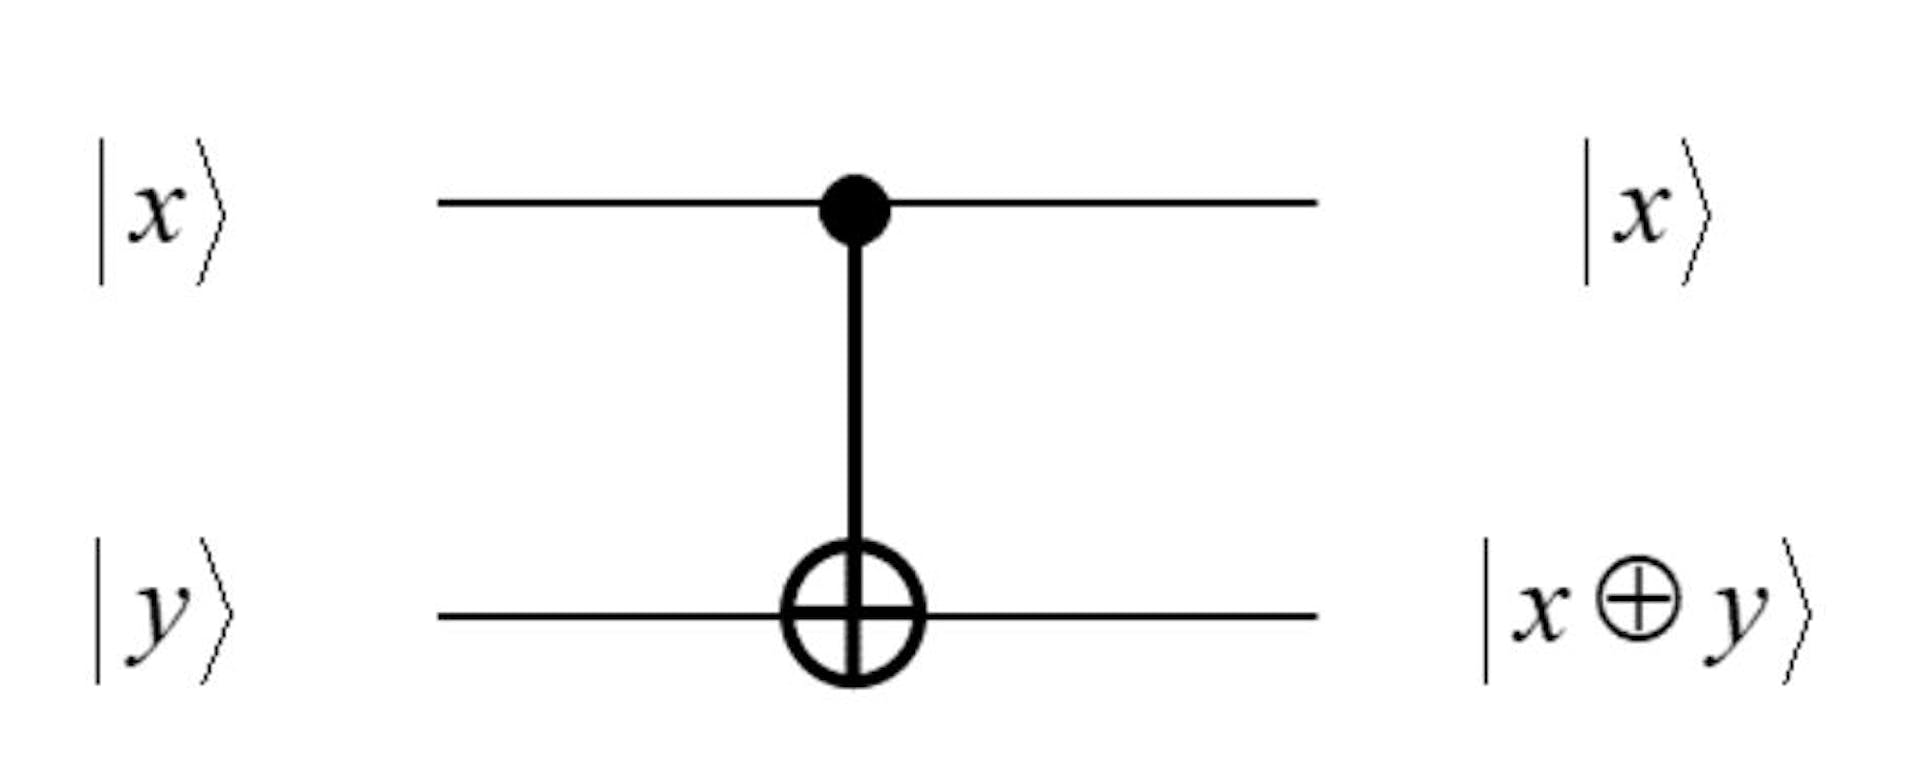 Porta CNOT -> Fonte - https://quantumcomputing.stackexchange.com/questions/8444/input-and-output-qubit-notation-in-quantum-gates